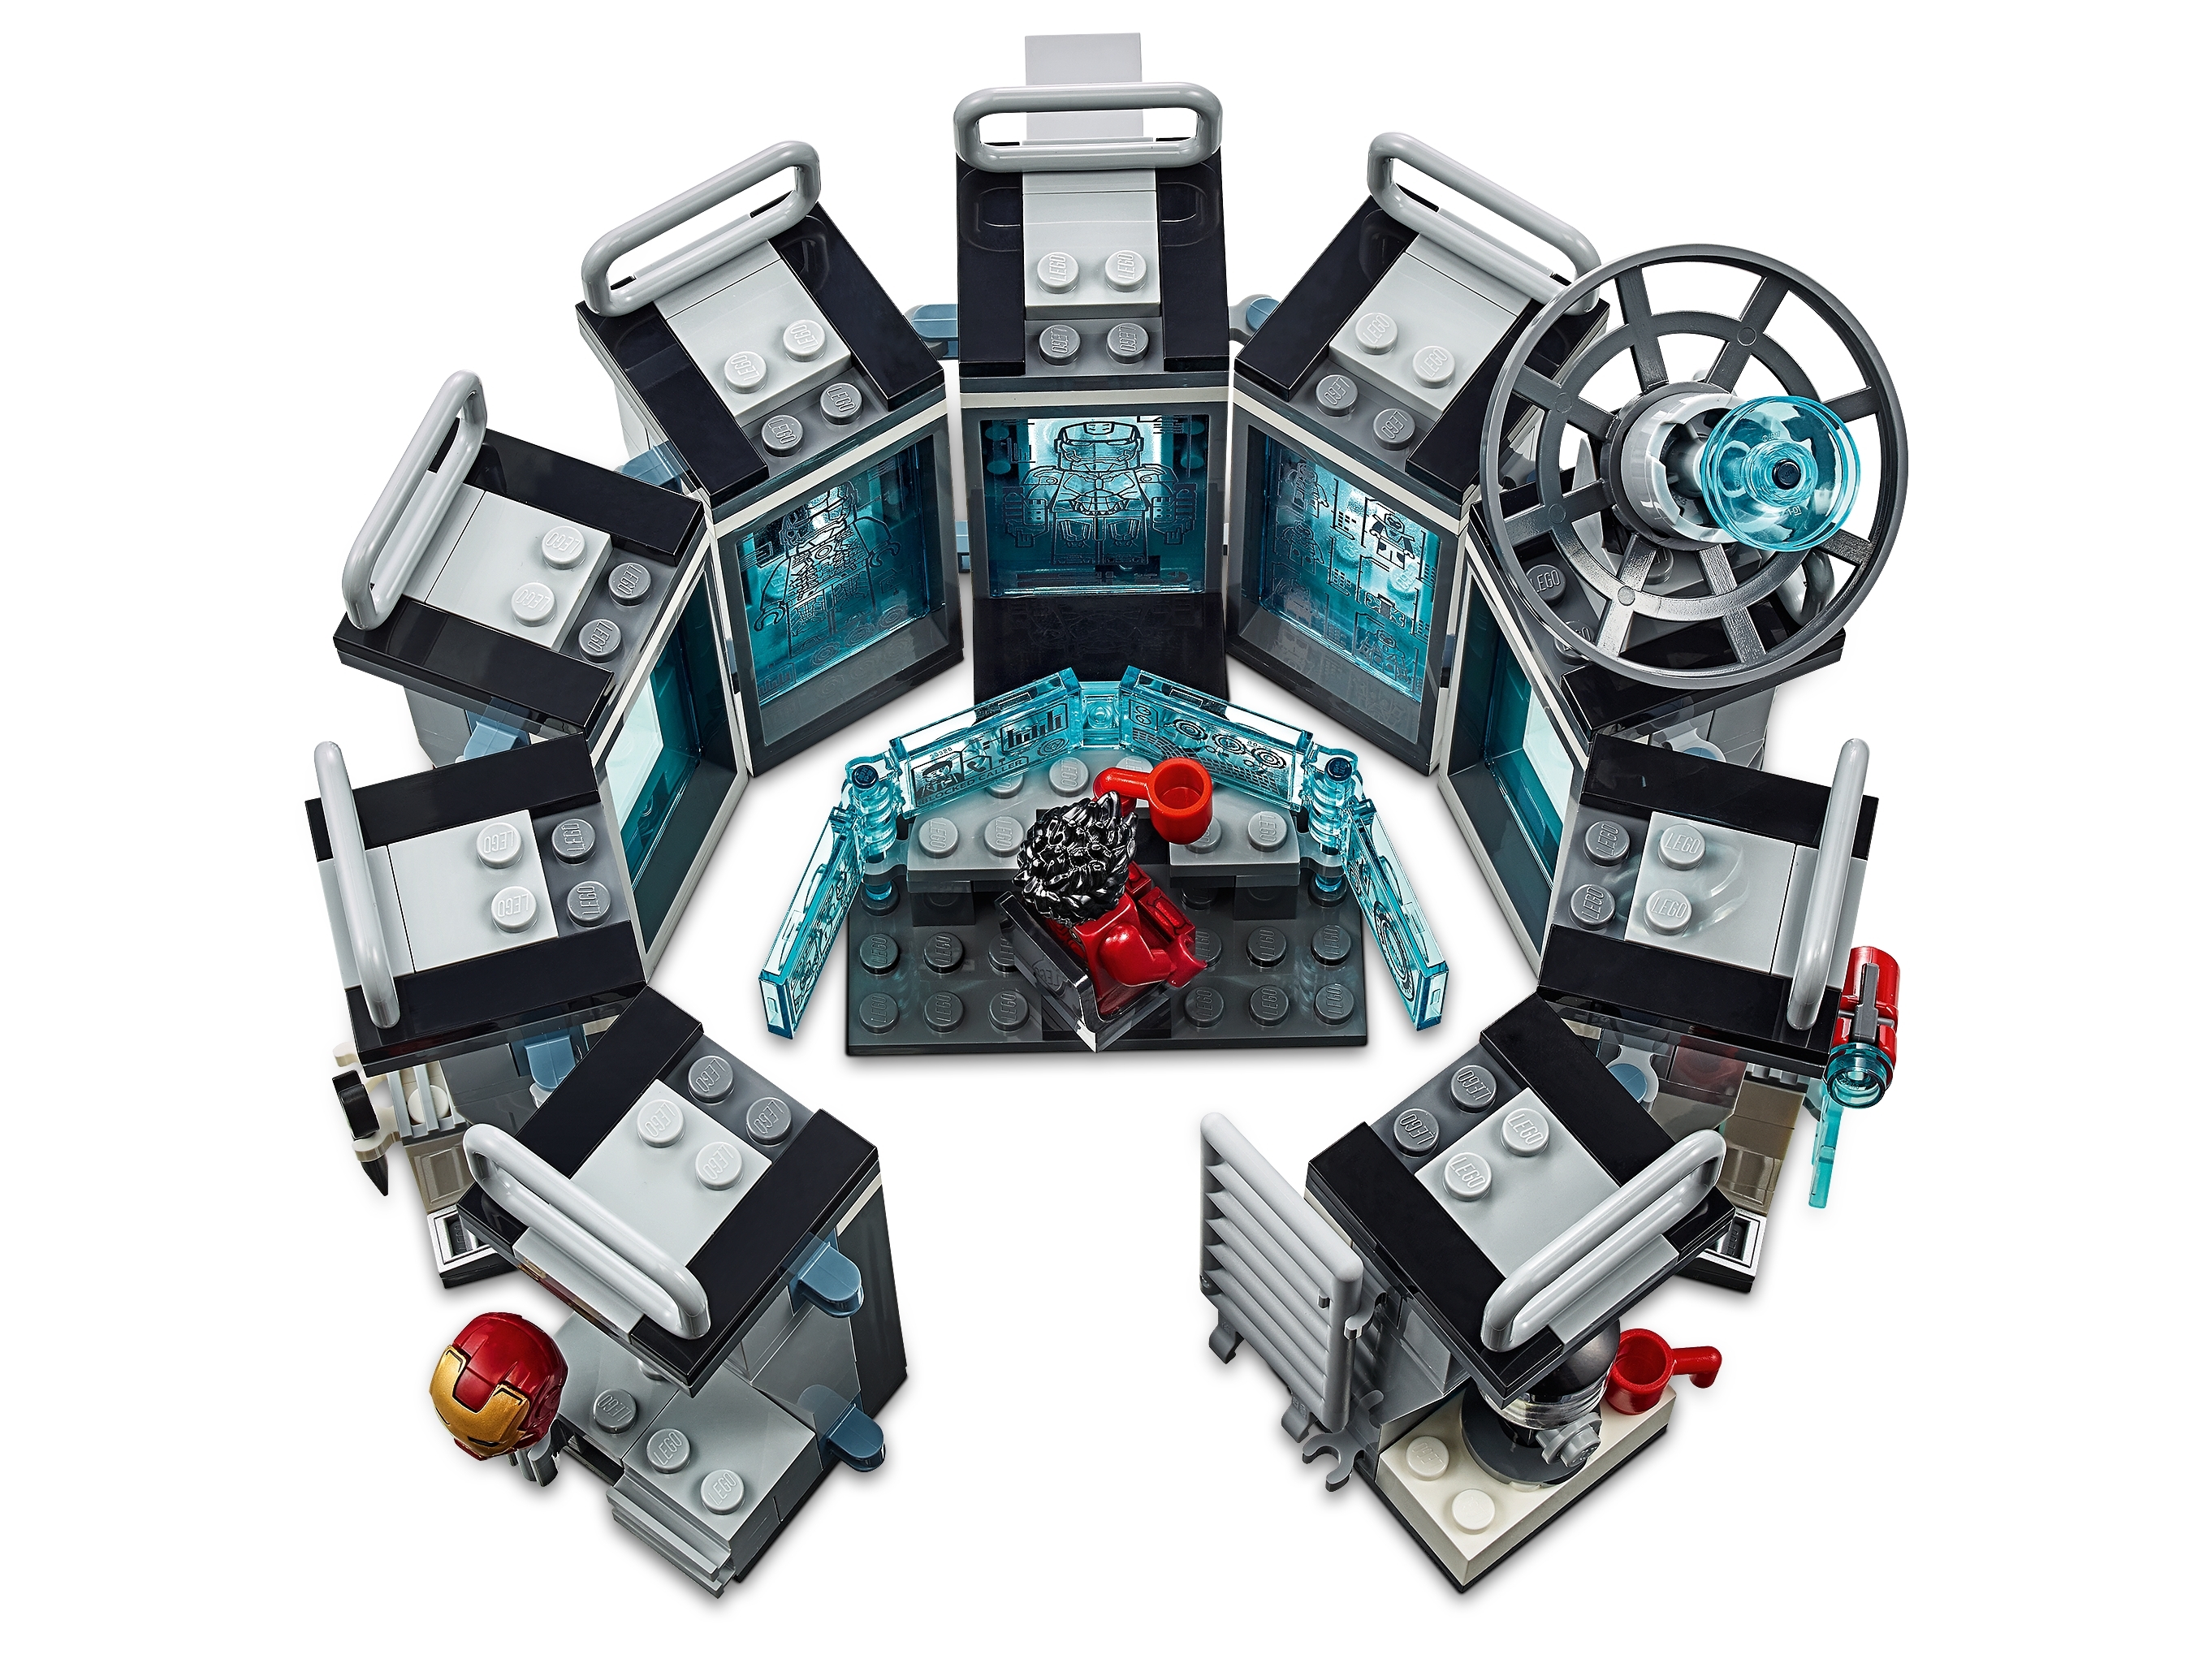 Marvel Avengers Endgame Iron Man Hall of Armor 76125 Building Blocks Toy DIY Set 